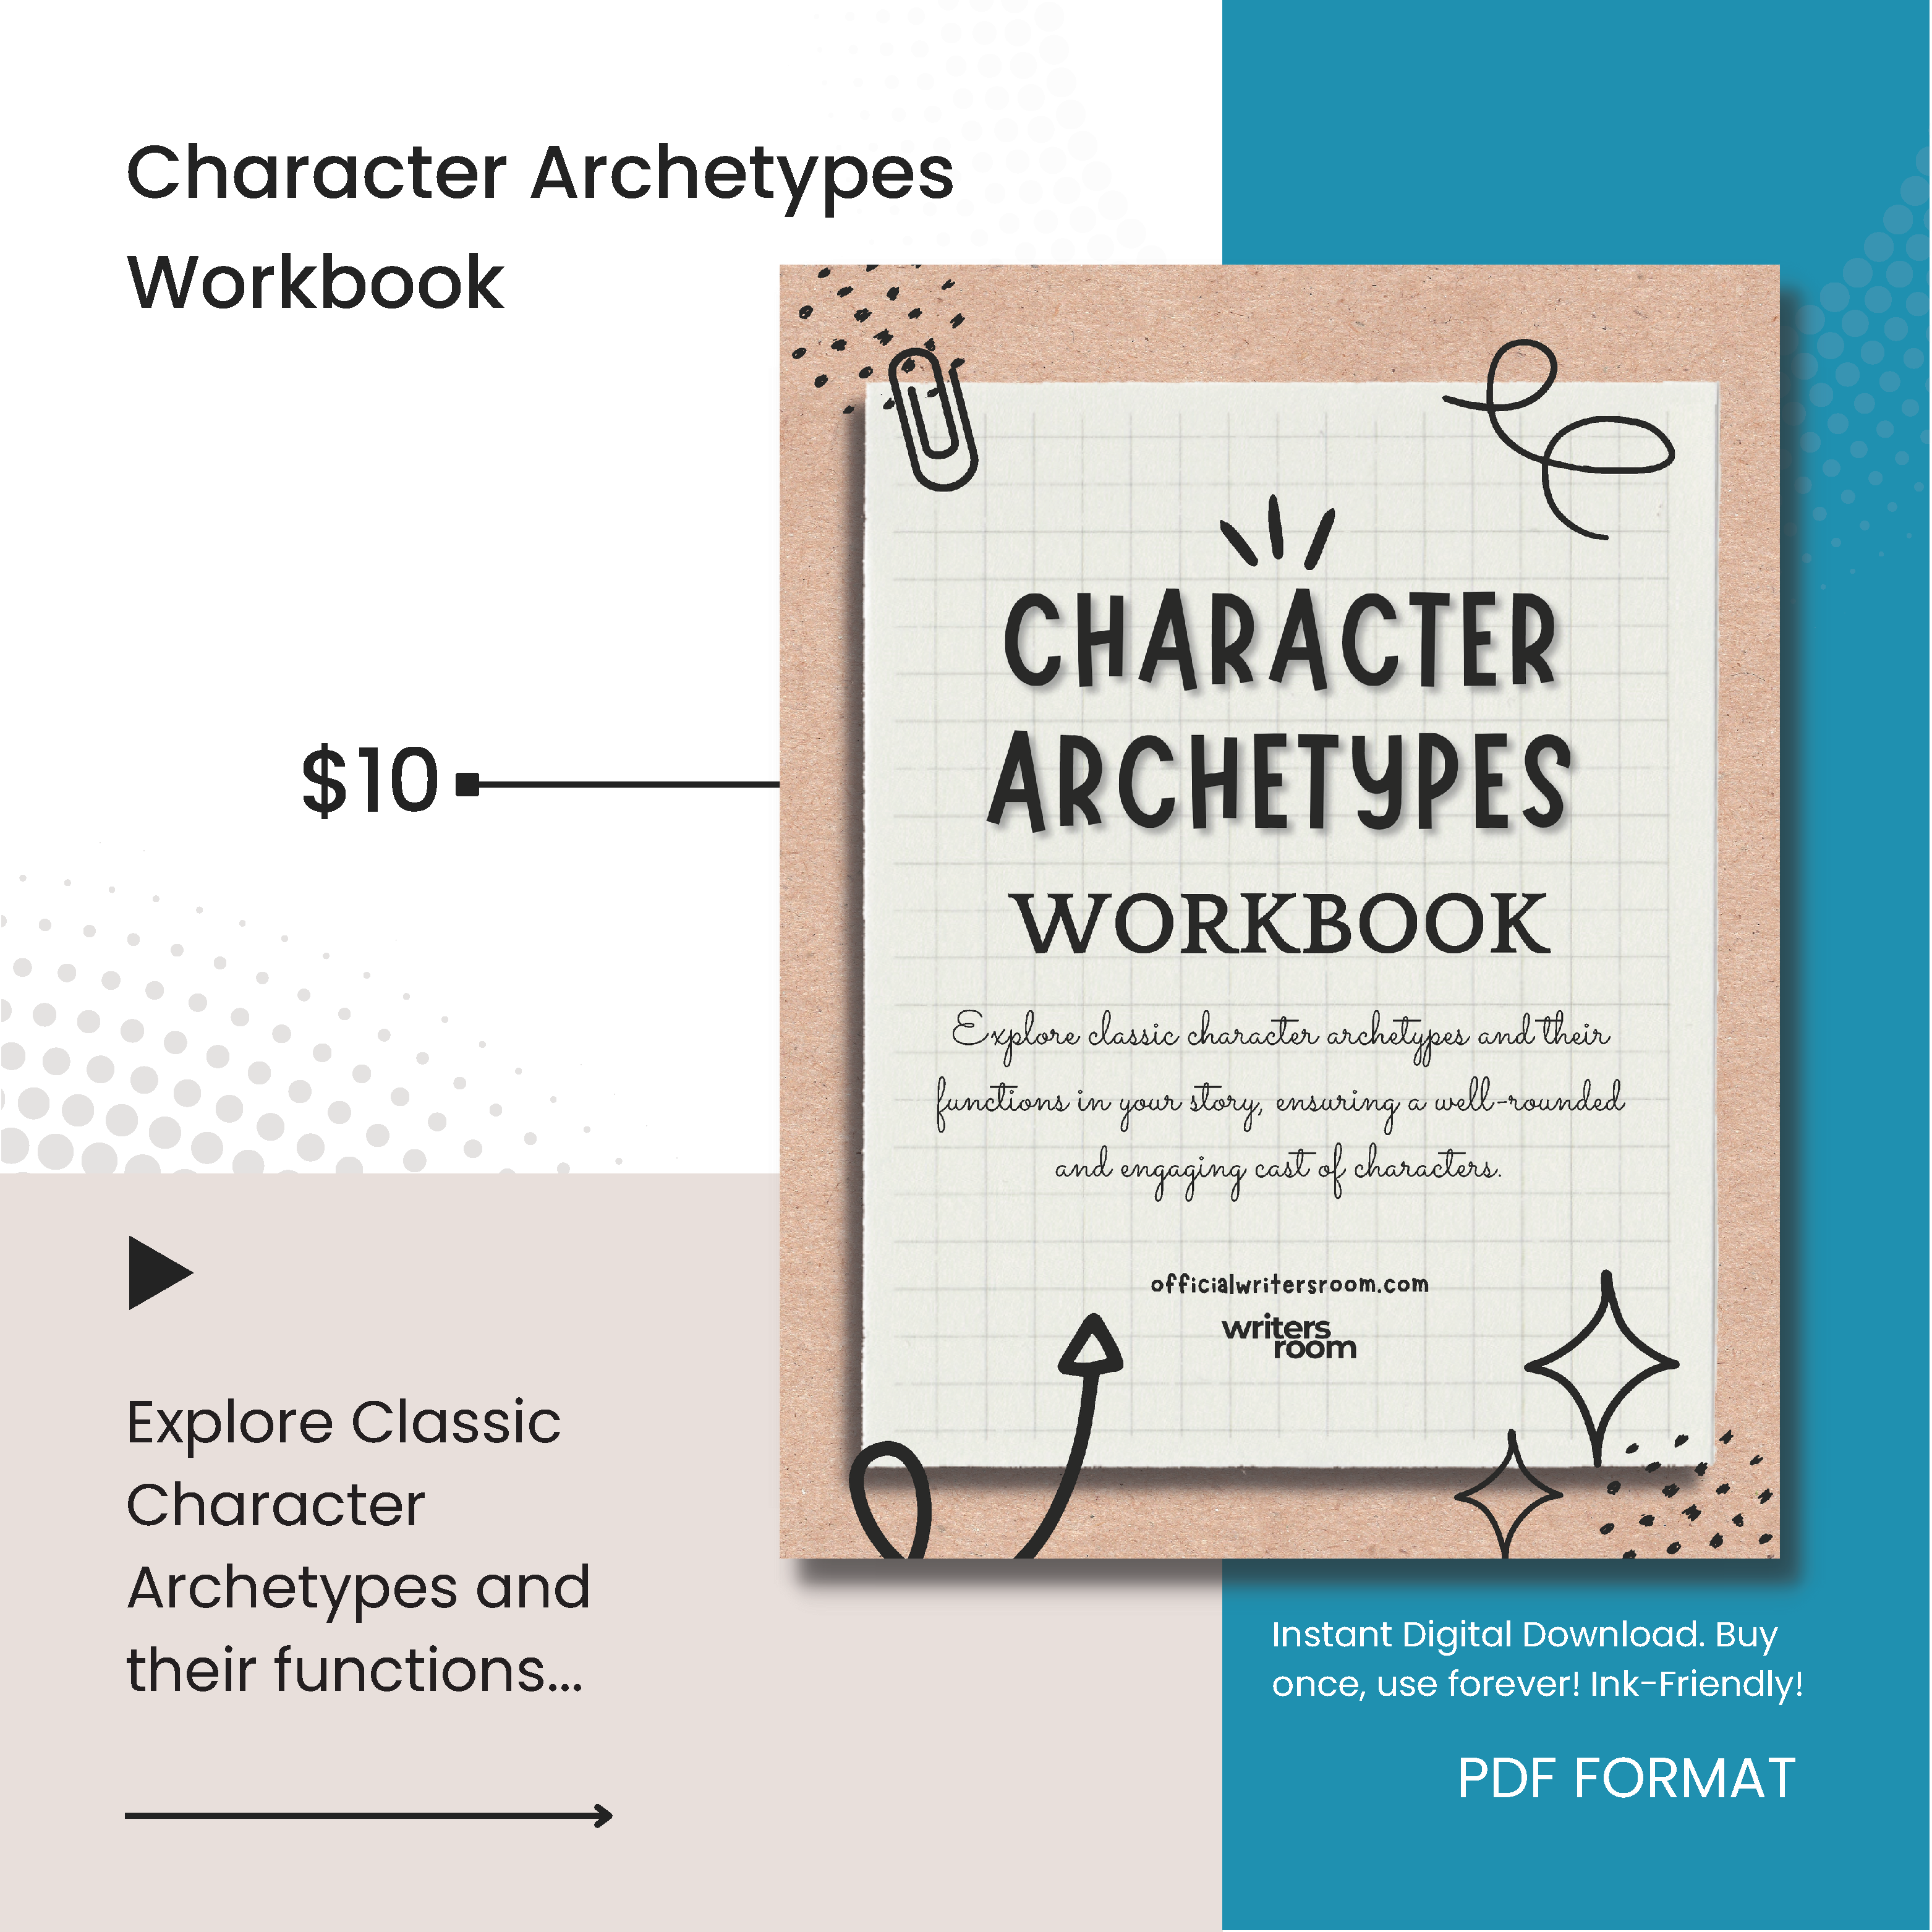 Character Archetypes Workbook